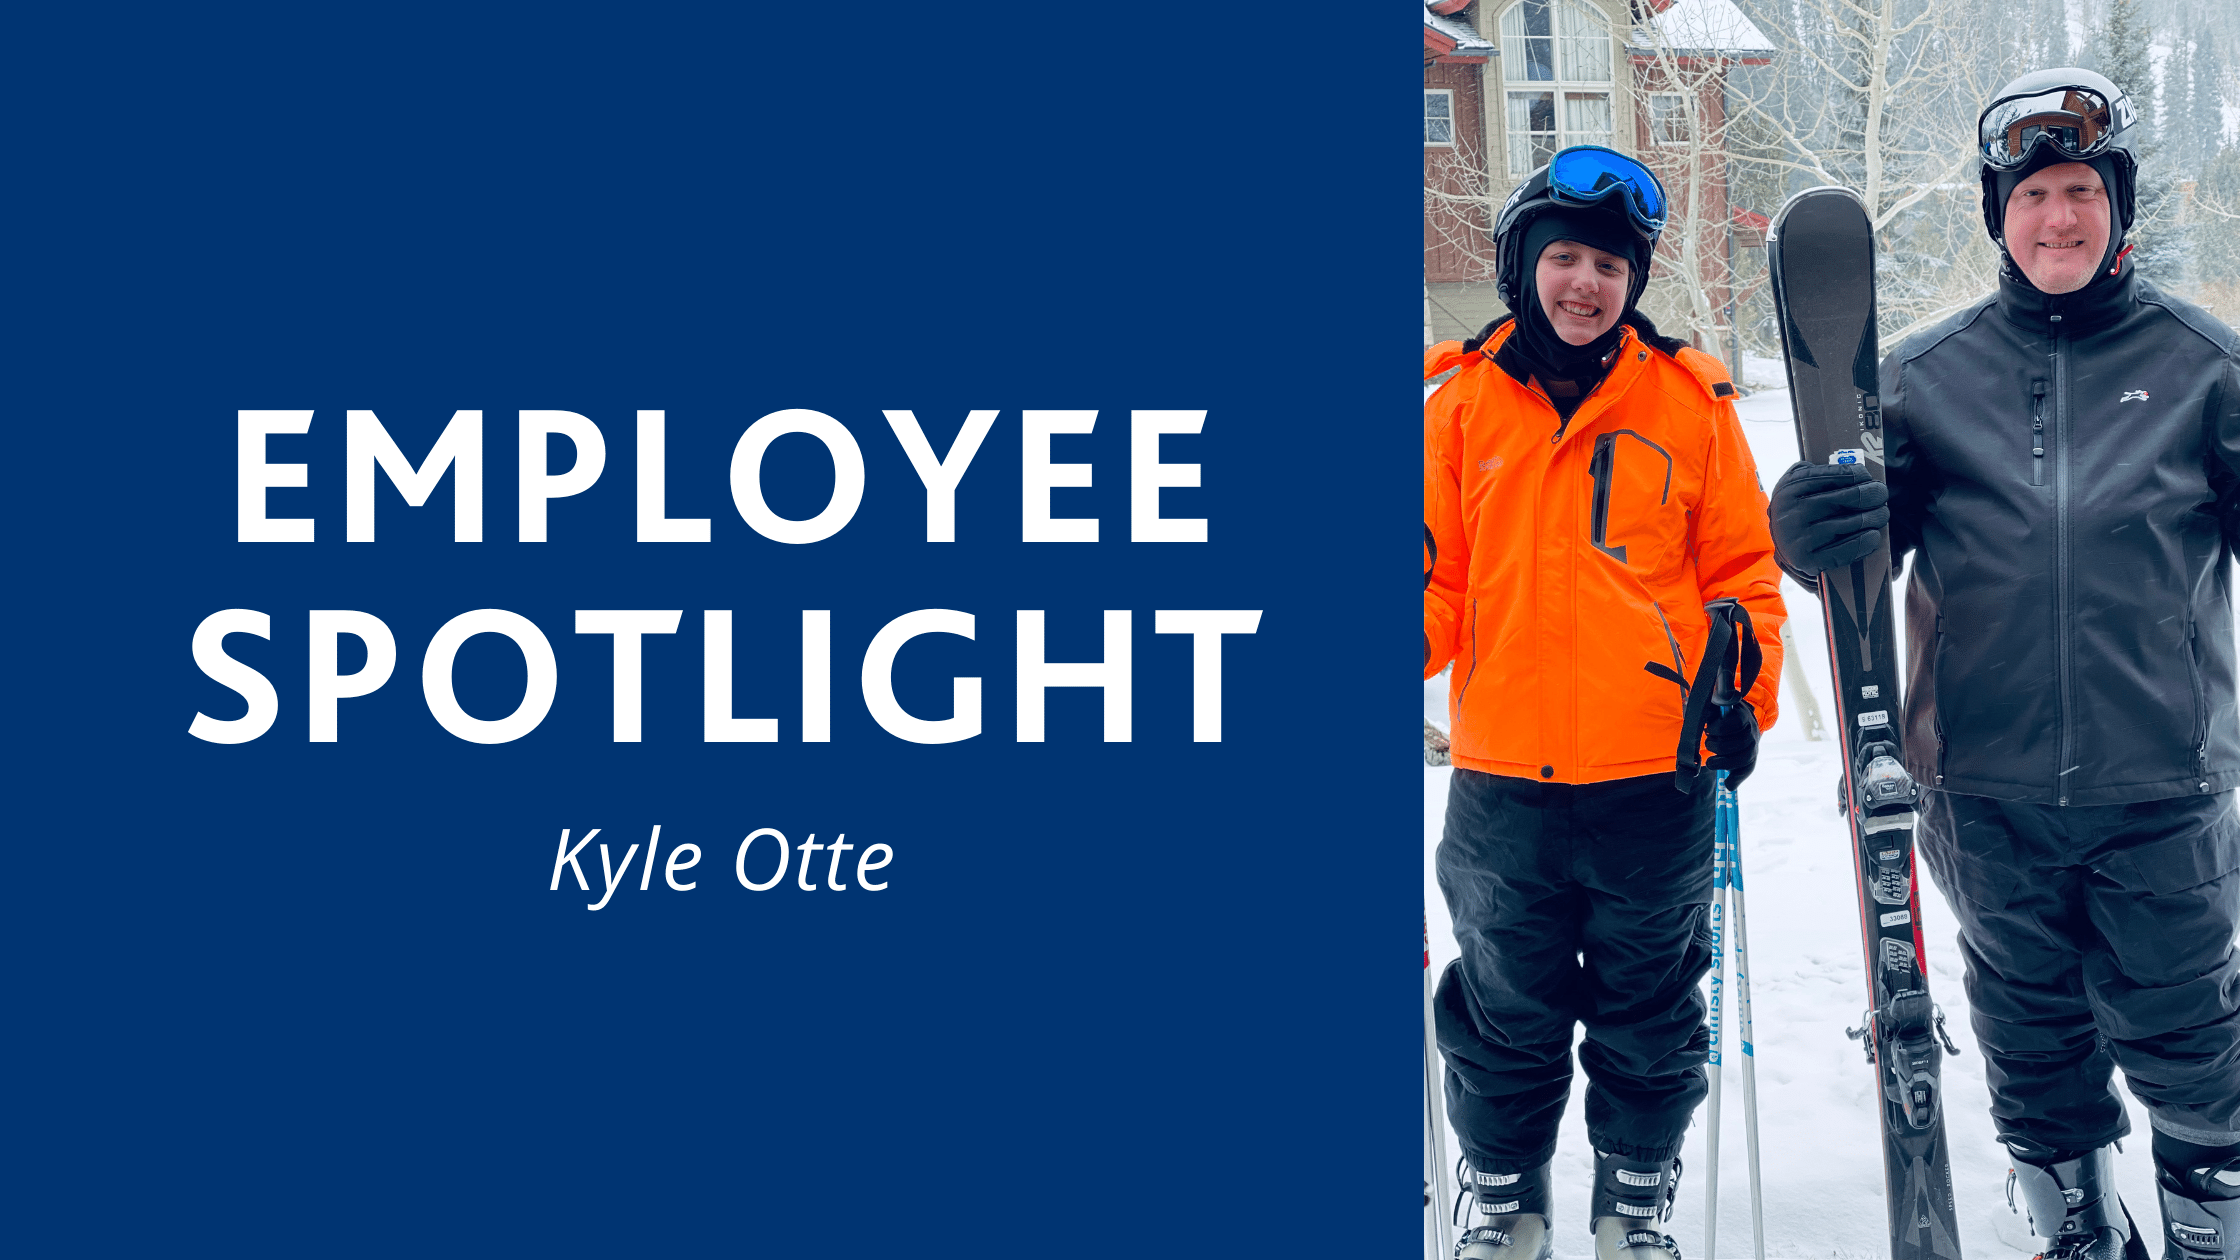 Kyle Otte Employee Spotlight